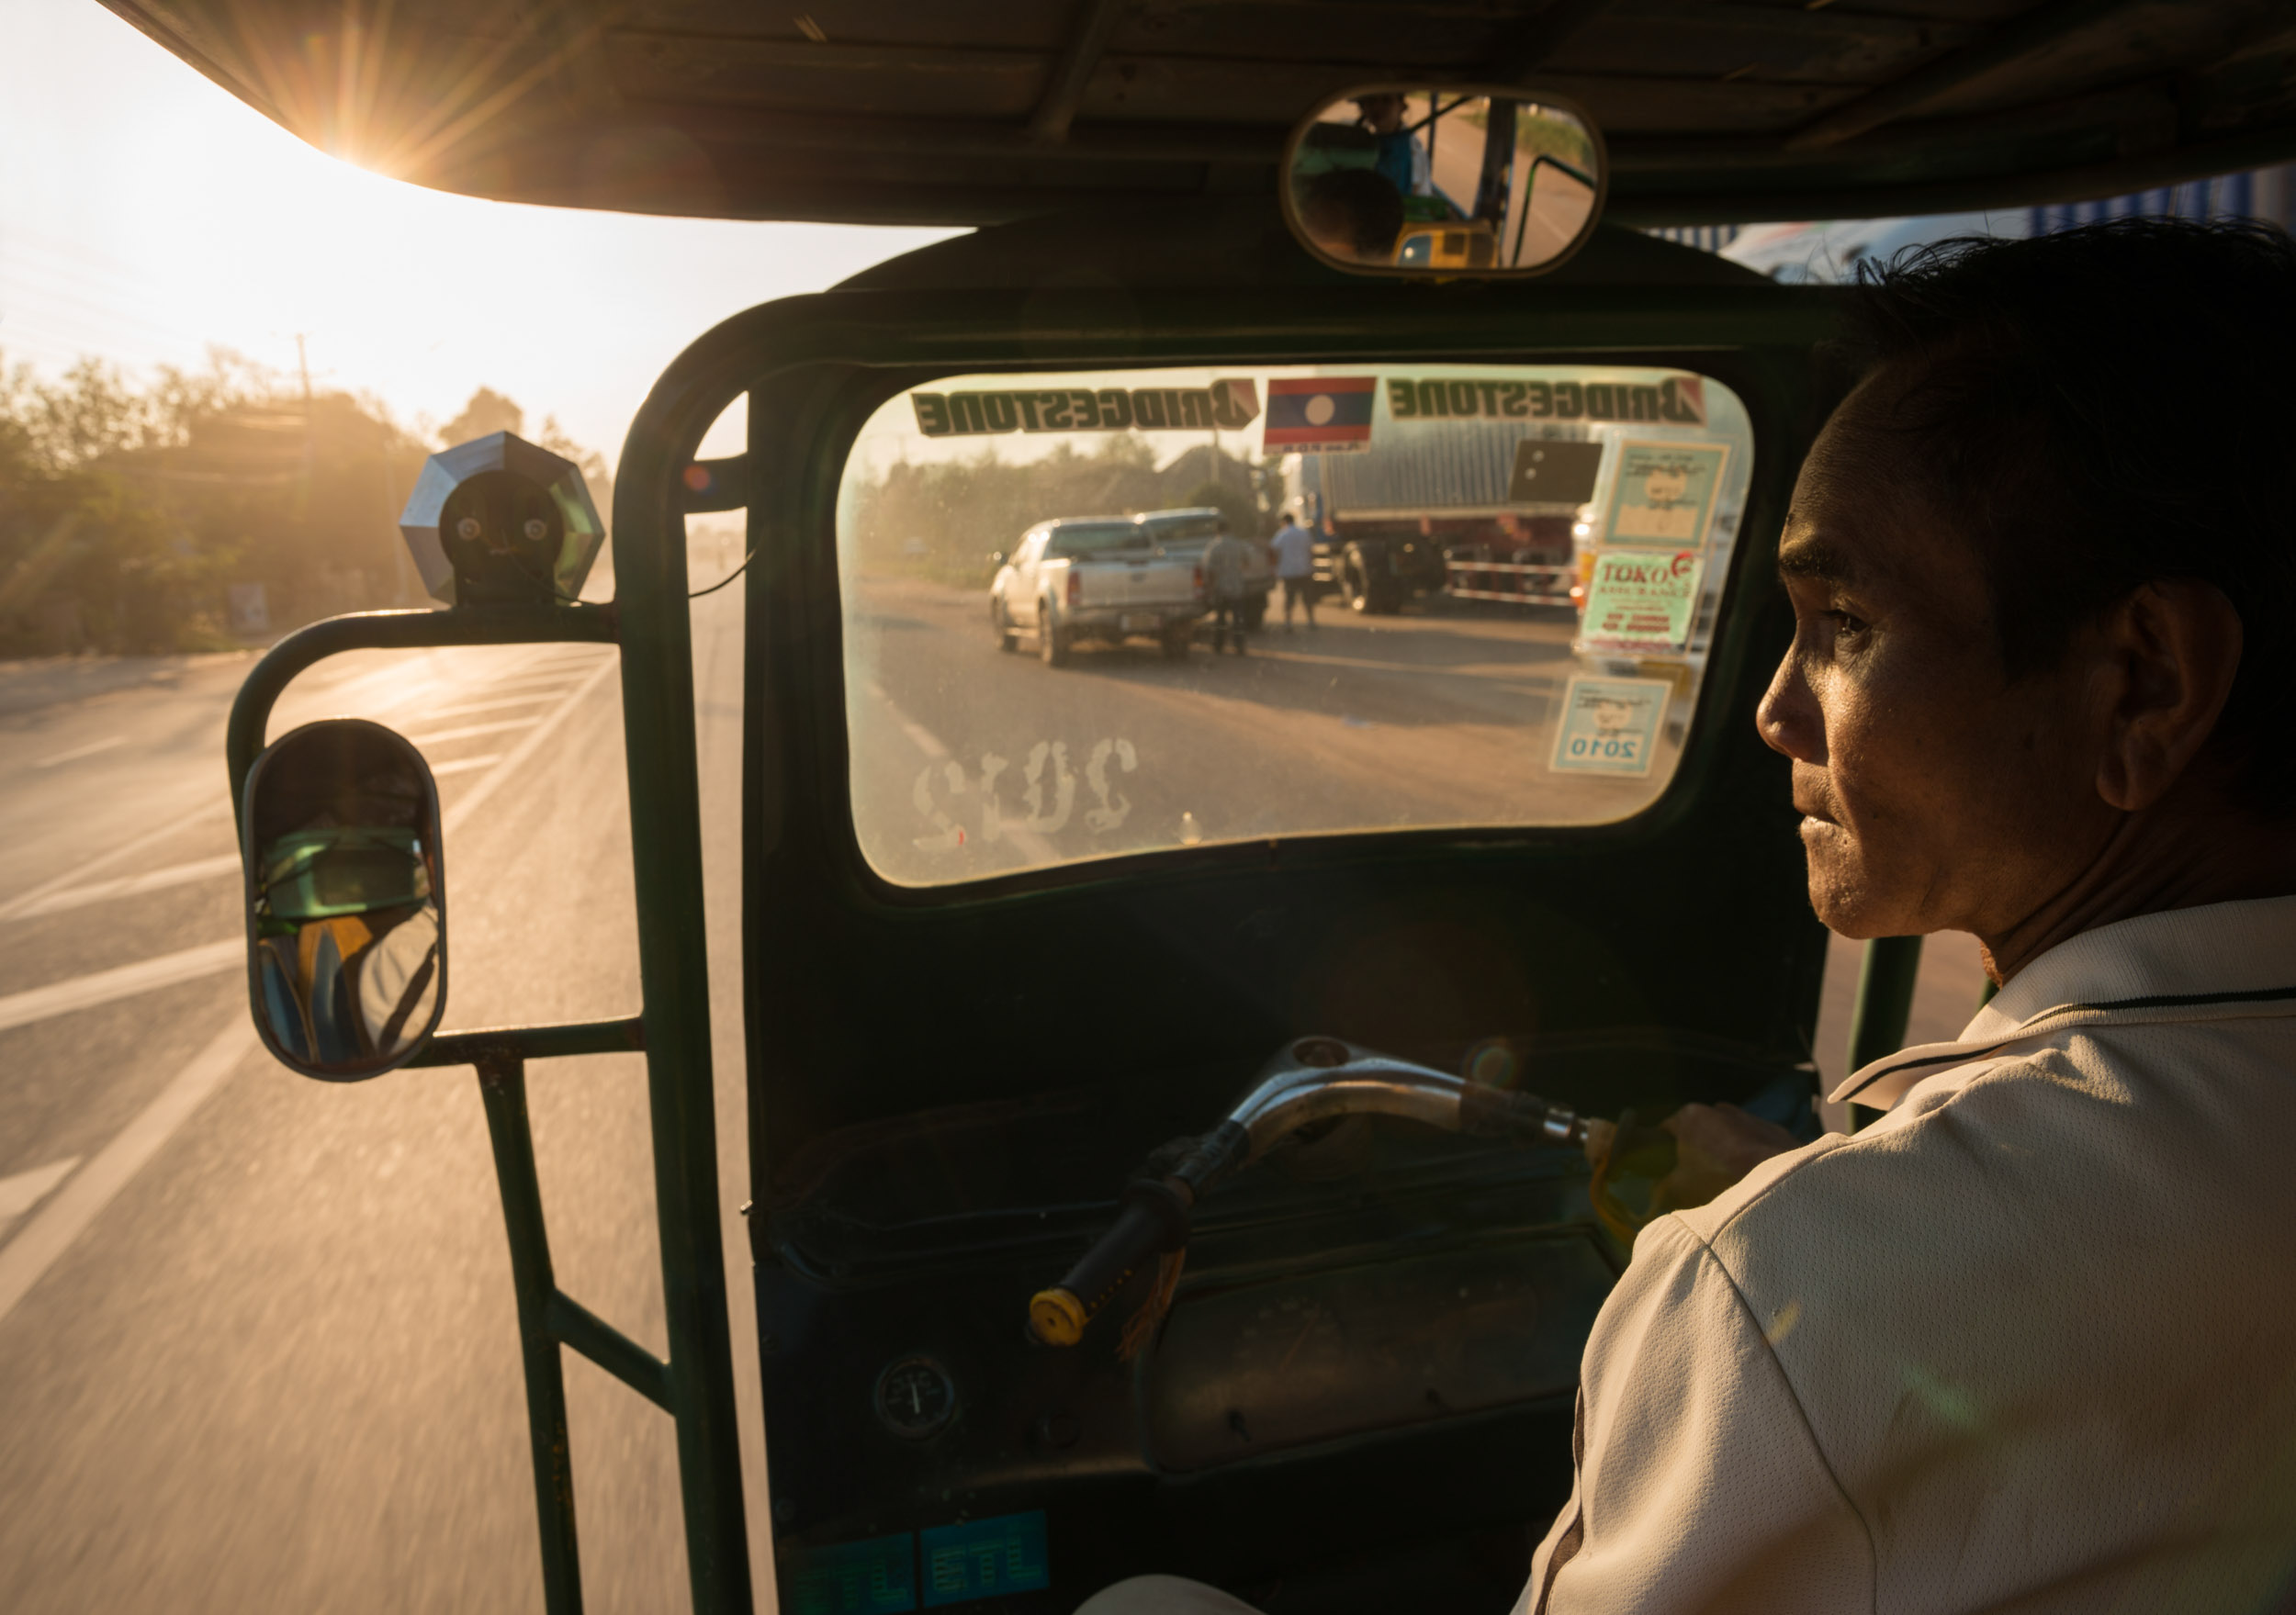 tuk-tuk-rickshaw-vehicle-road-transport-laos-asia